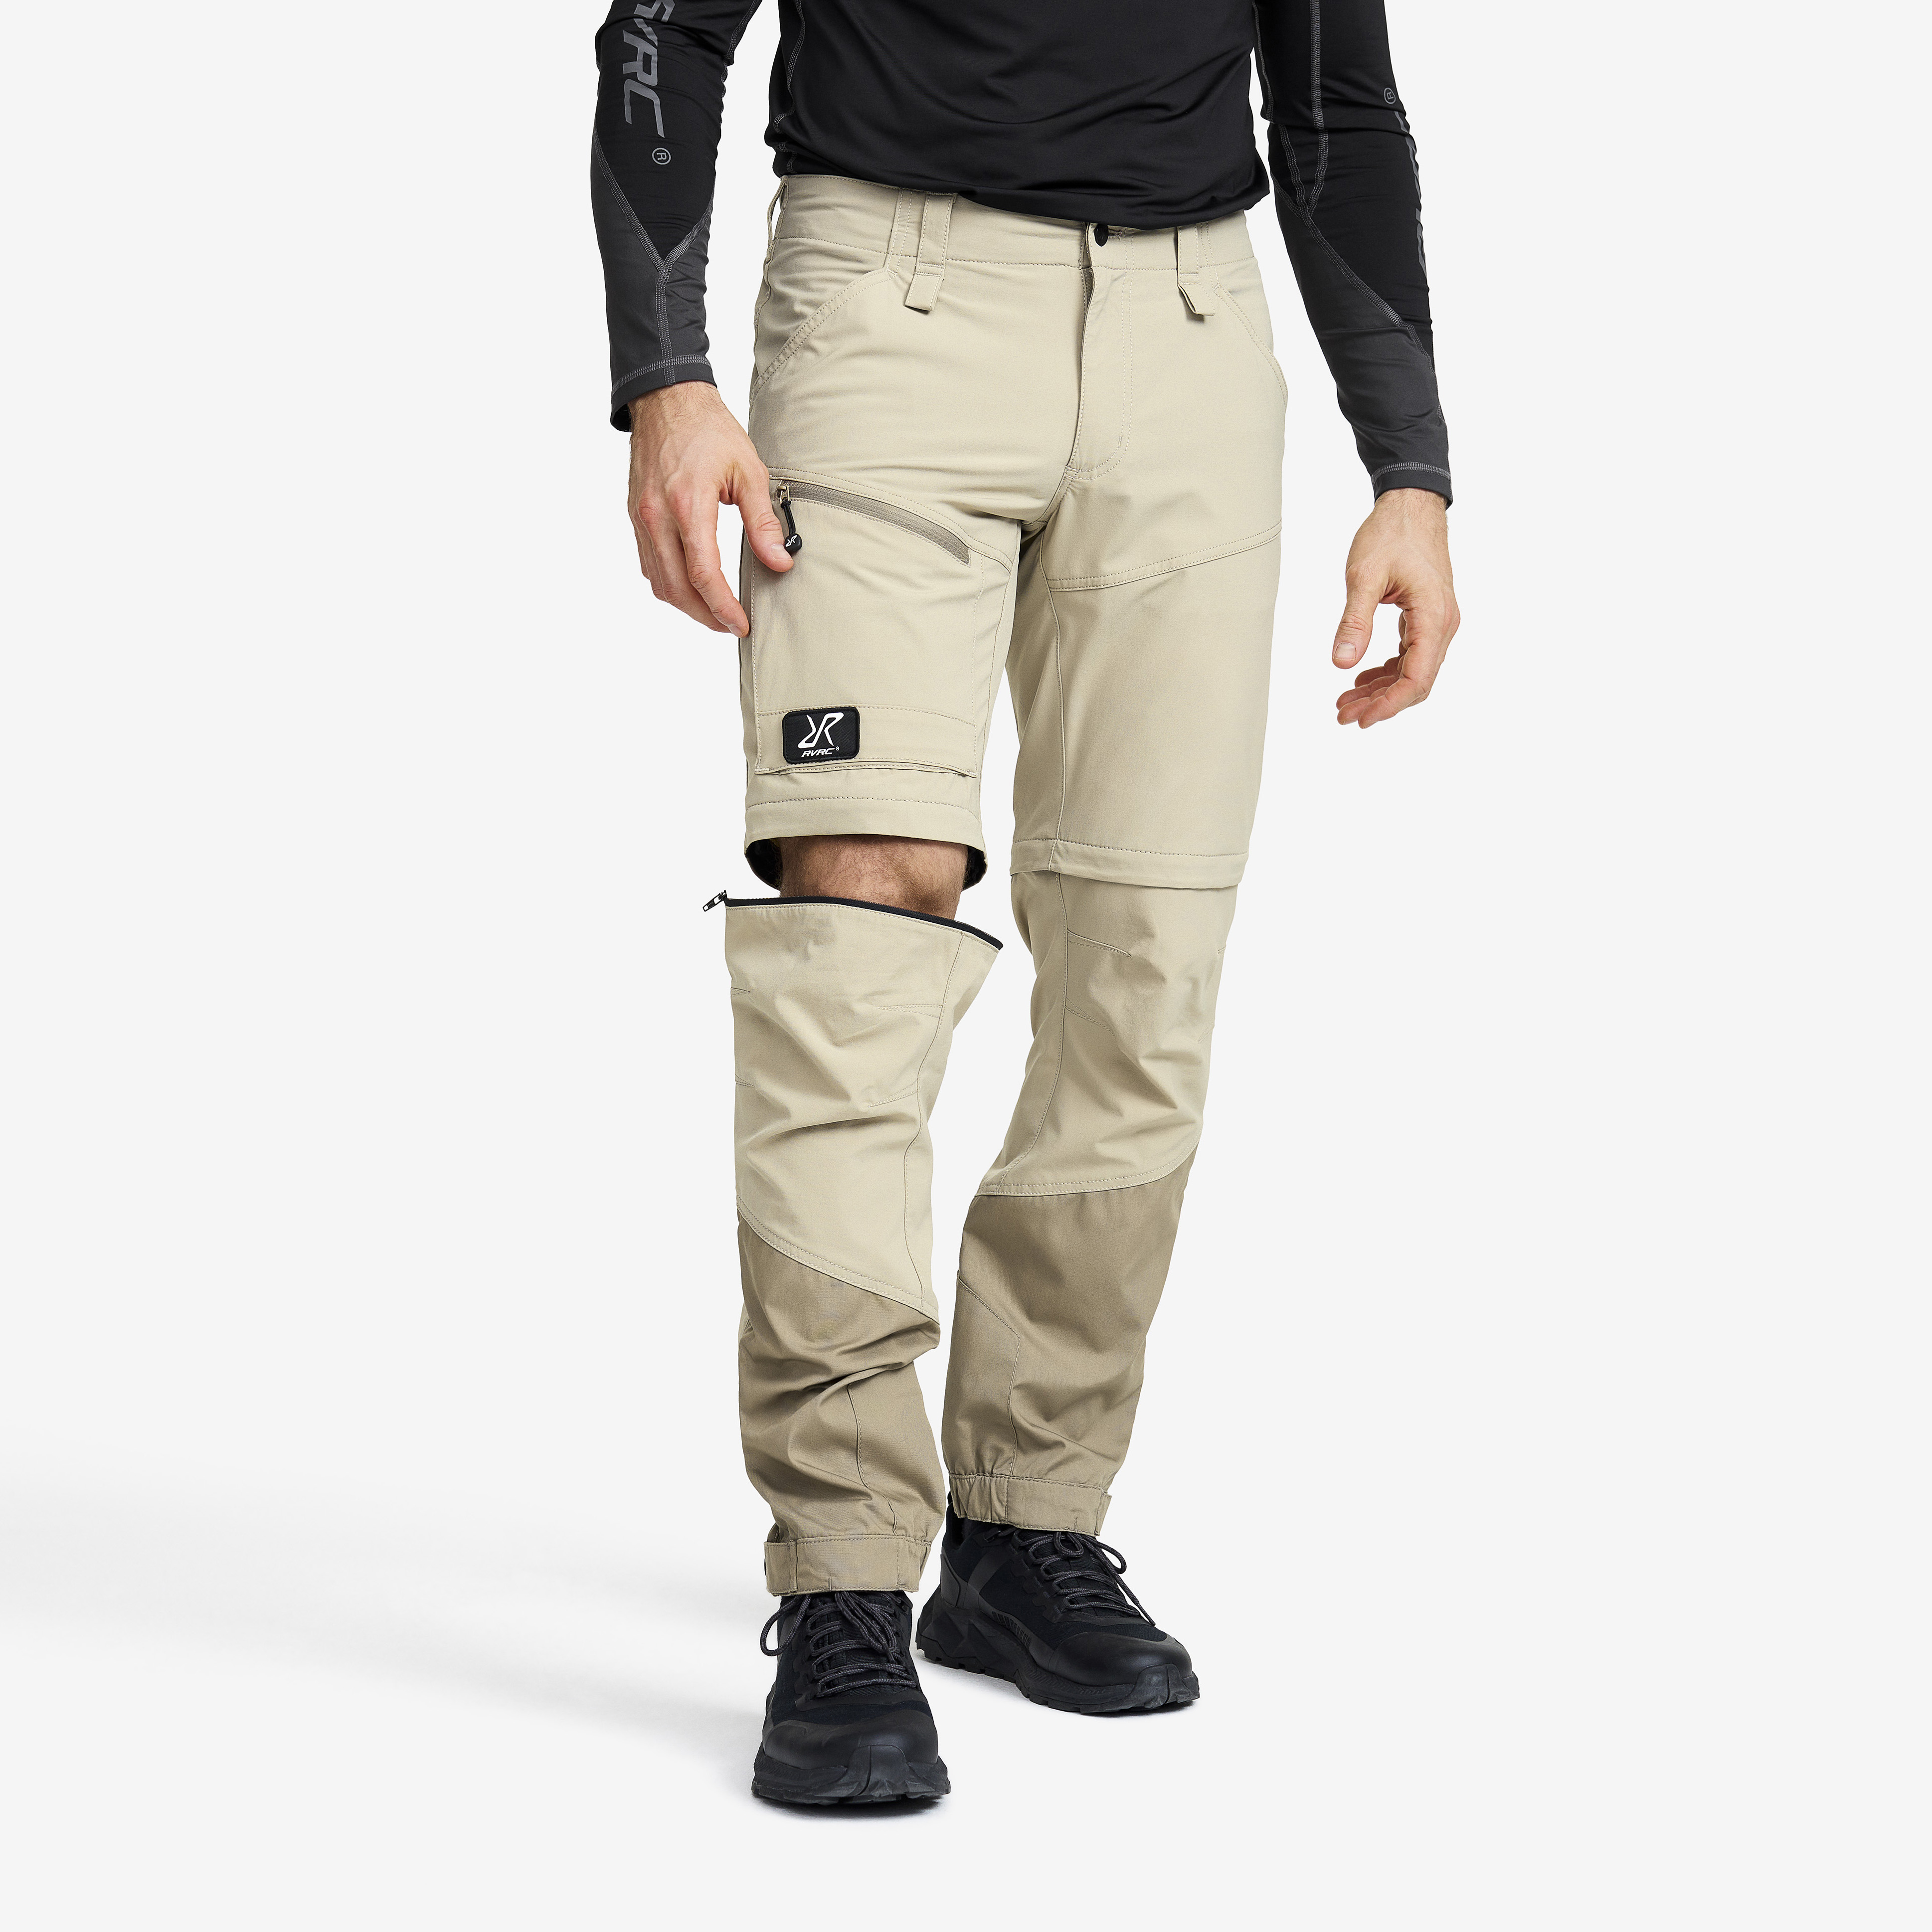 Range Pro Zip-off Pants Aluminium/Brindle Men